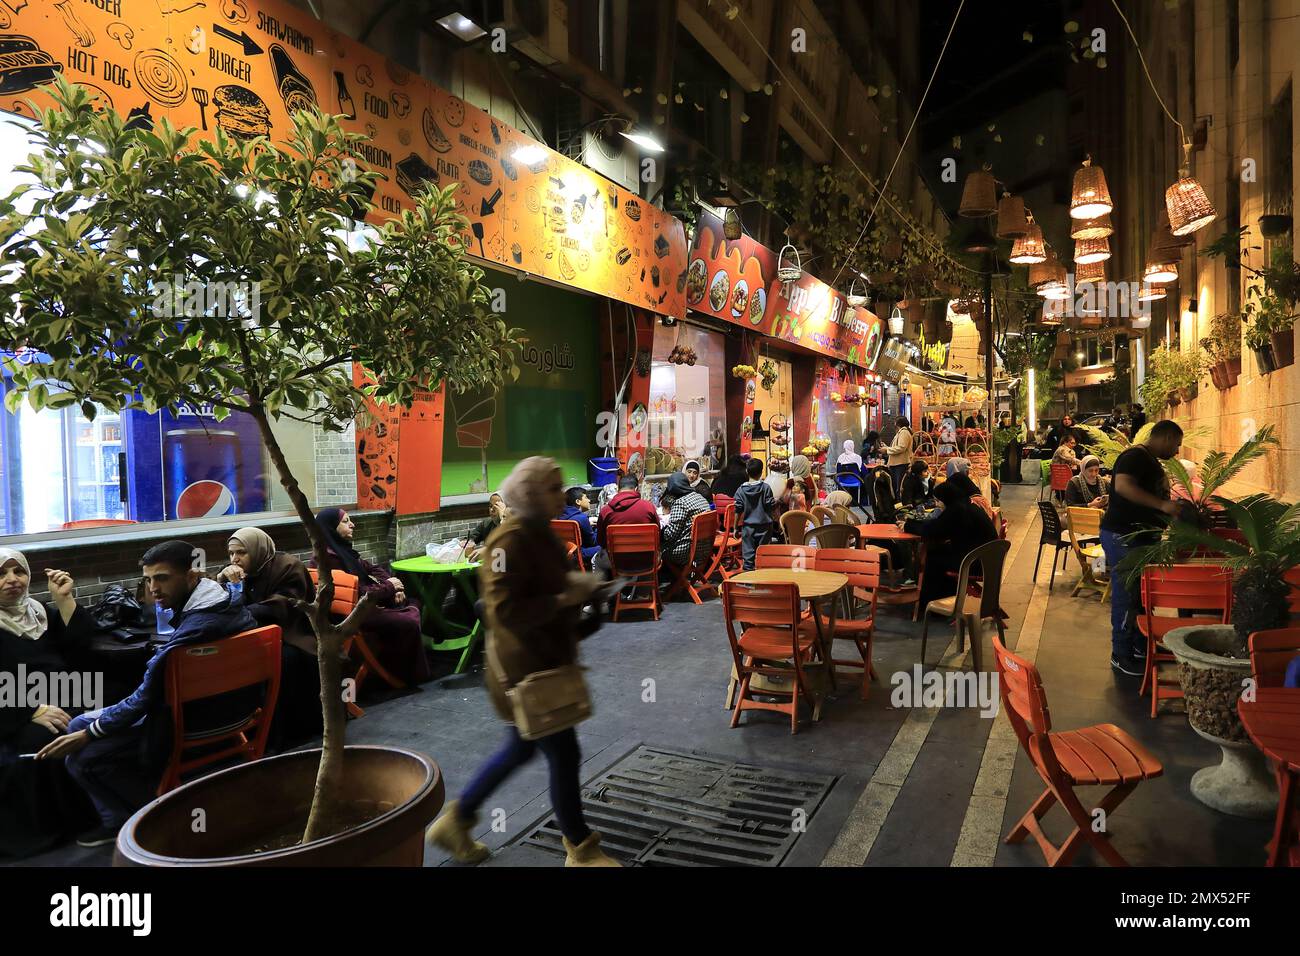 A cafe scene in Downtown Amman City, Jordan, Middle East Stock Photo